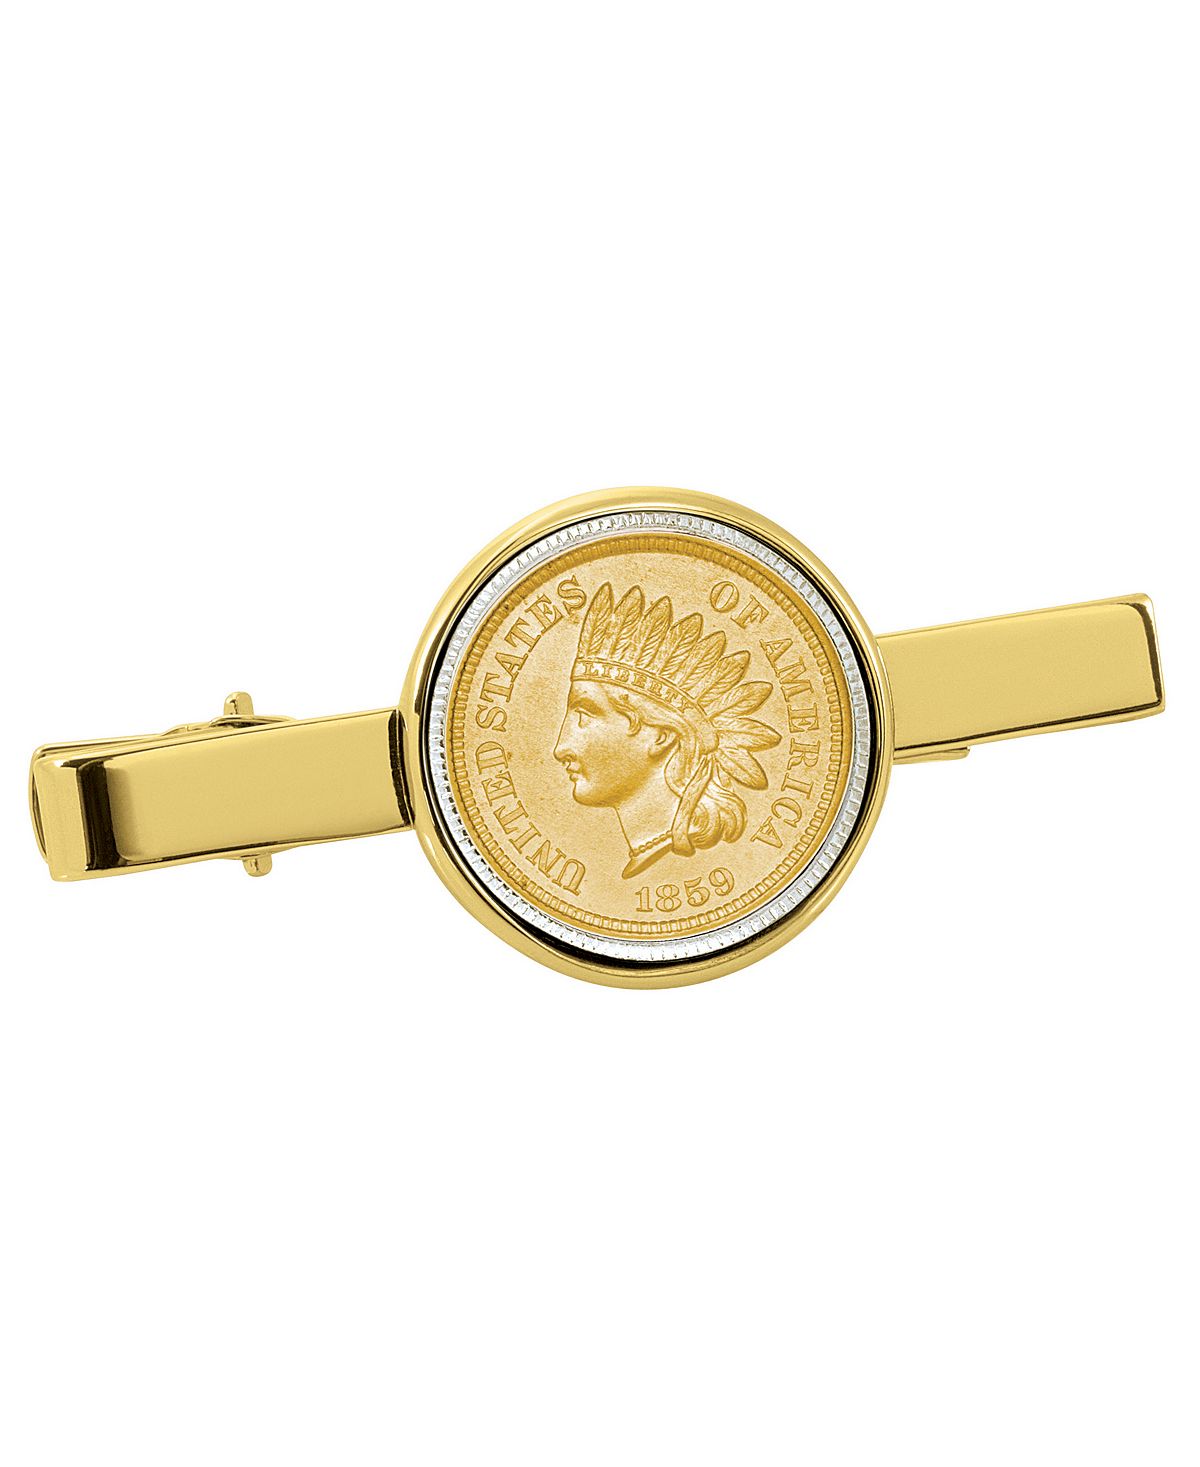 Позолоченный зажим для галстука для монет «Индийский пенни» 1800-х годов American Coin Treasures 2021 maple leaf gold coin commonwealth queen s coin commemorative coin badge gift souvenir coins